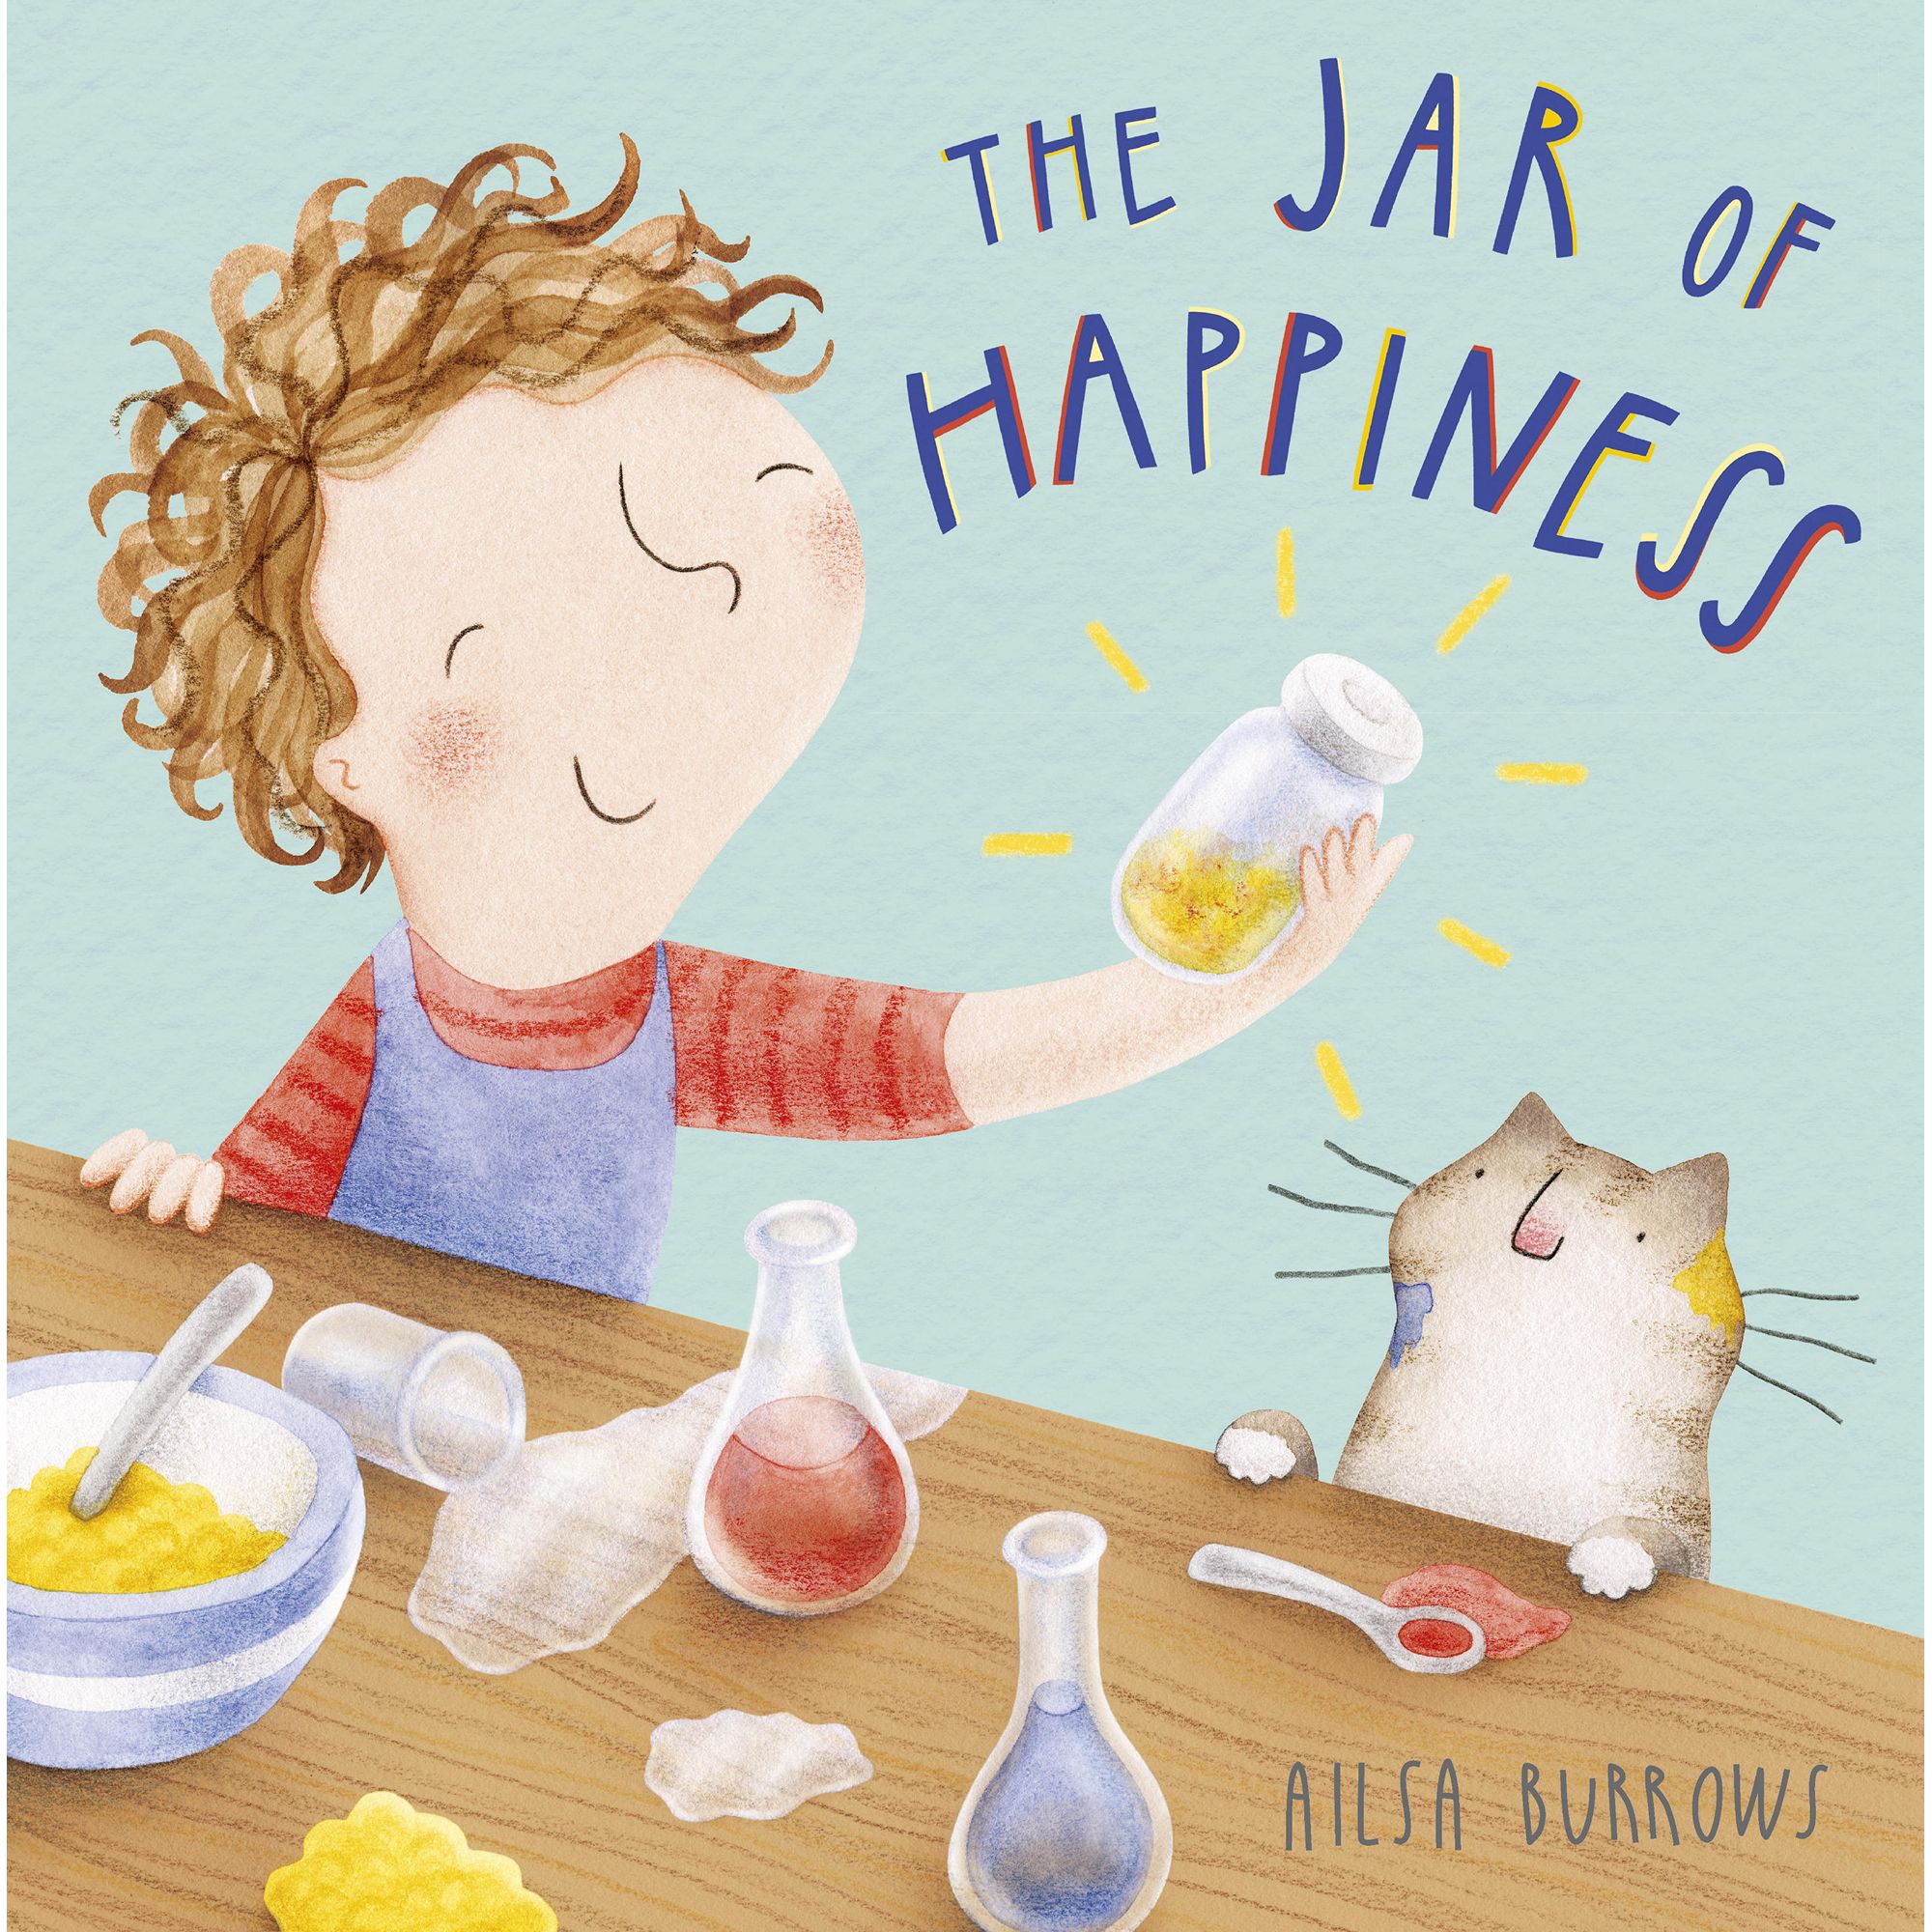 Of happiness jar Happiness Jar